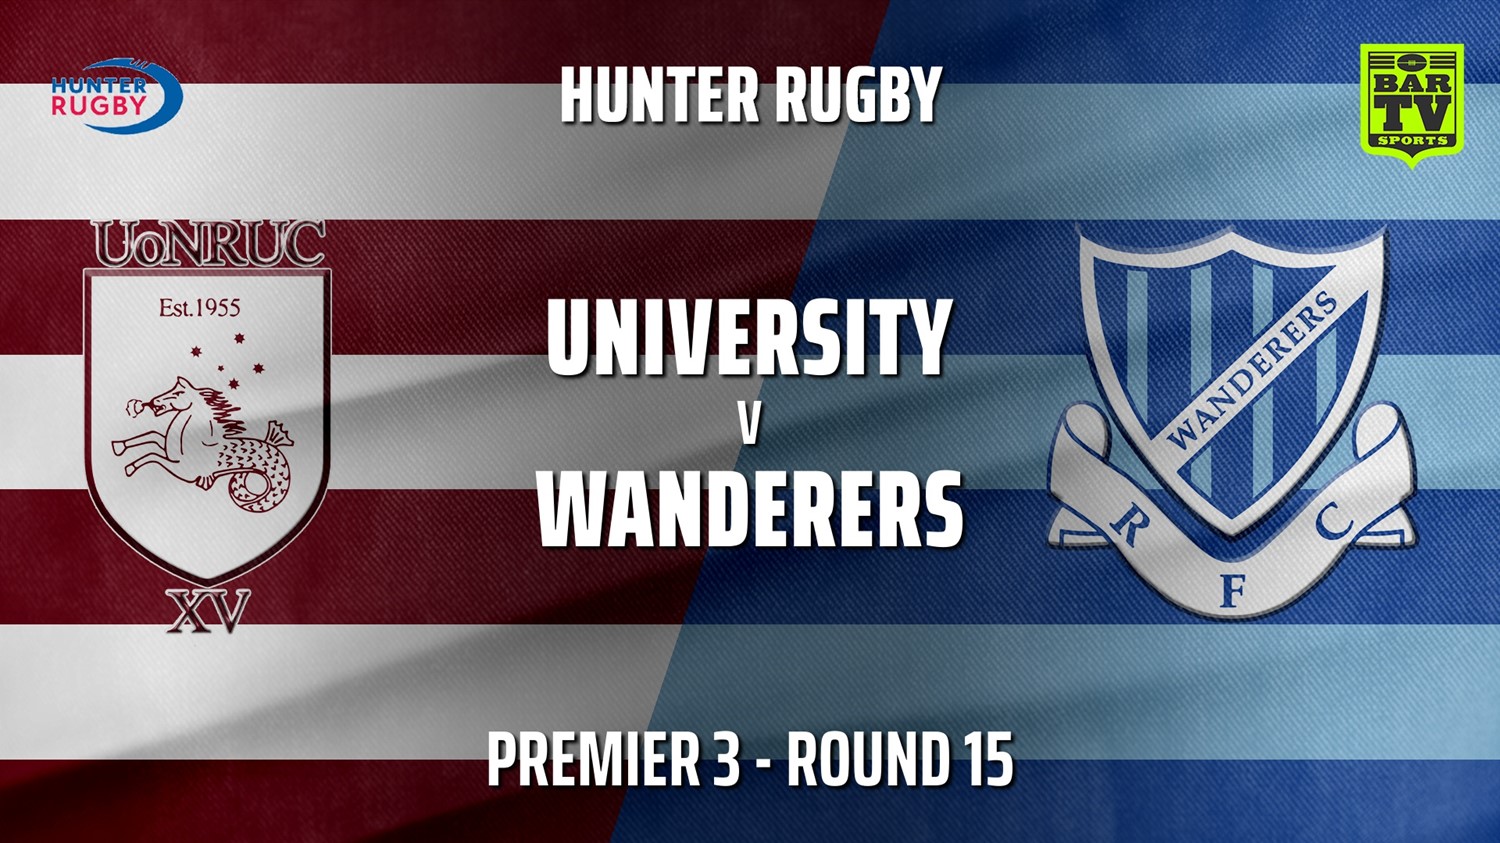 210731-Hunter Rugby Round 15 - Premier 3 - University Of Newcastle v Wanderers Slate Image